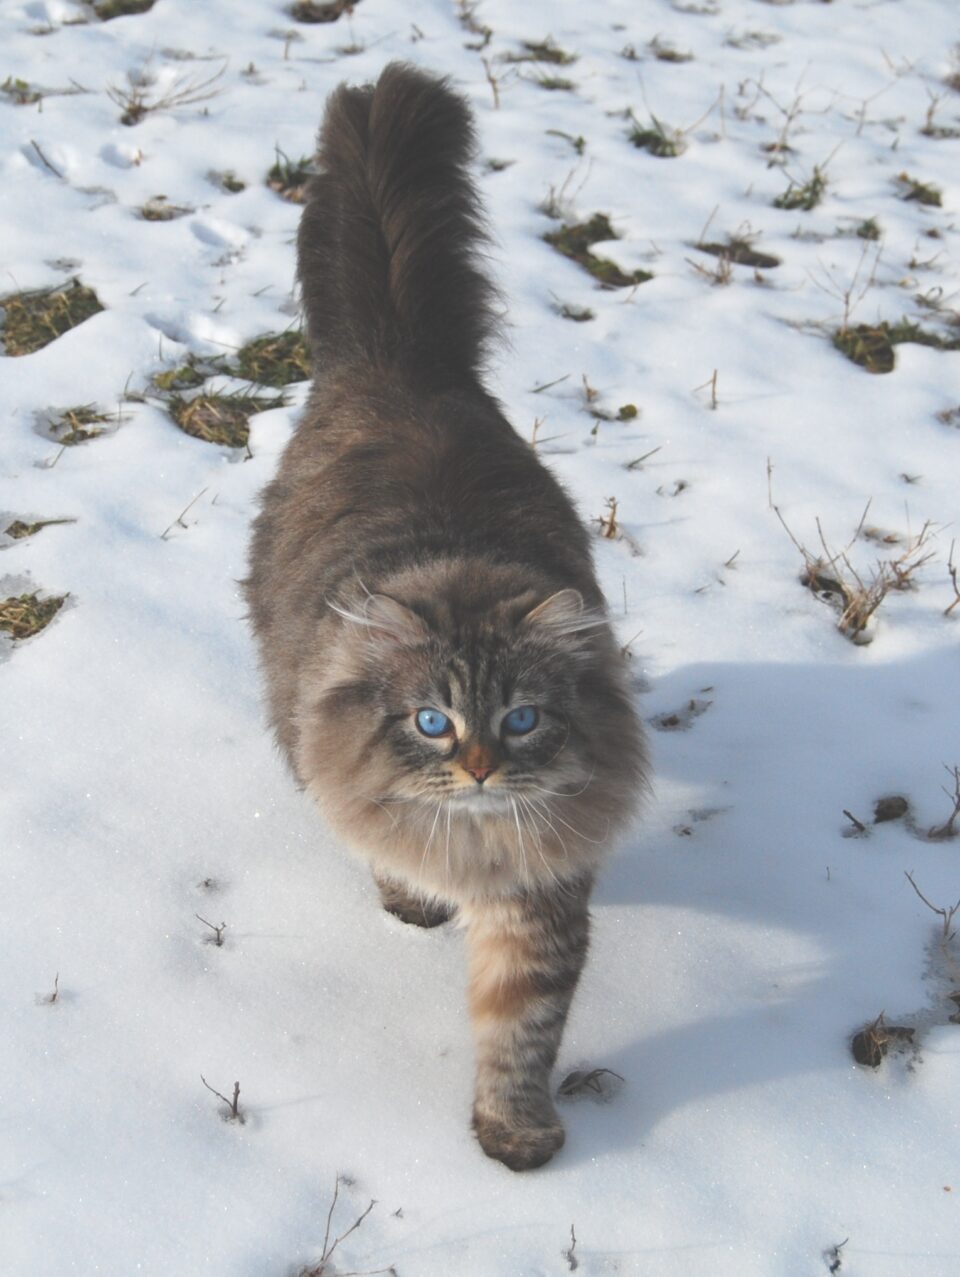 Disney cat breeds - Siberian cat